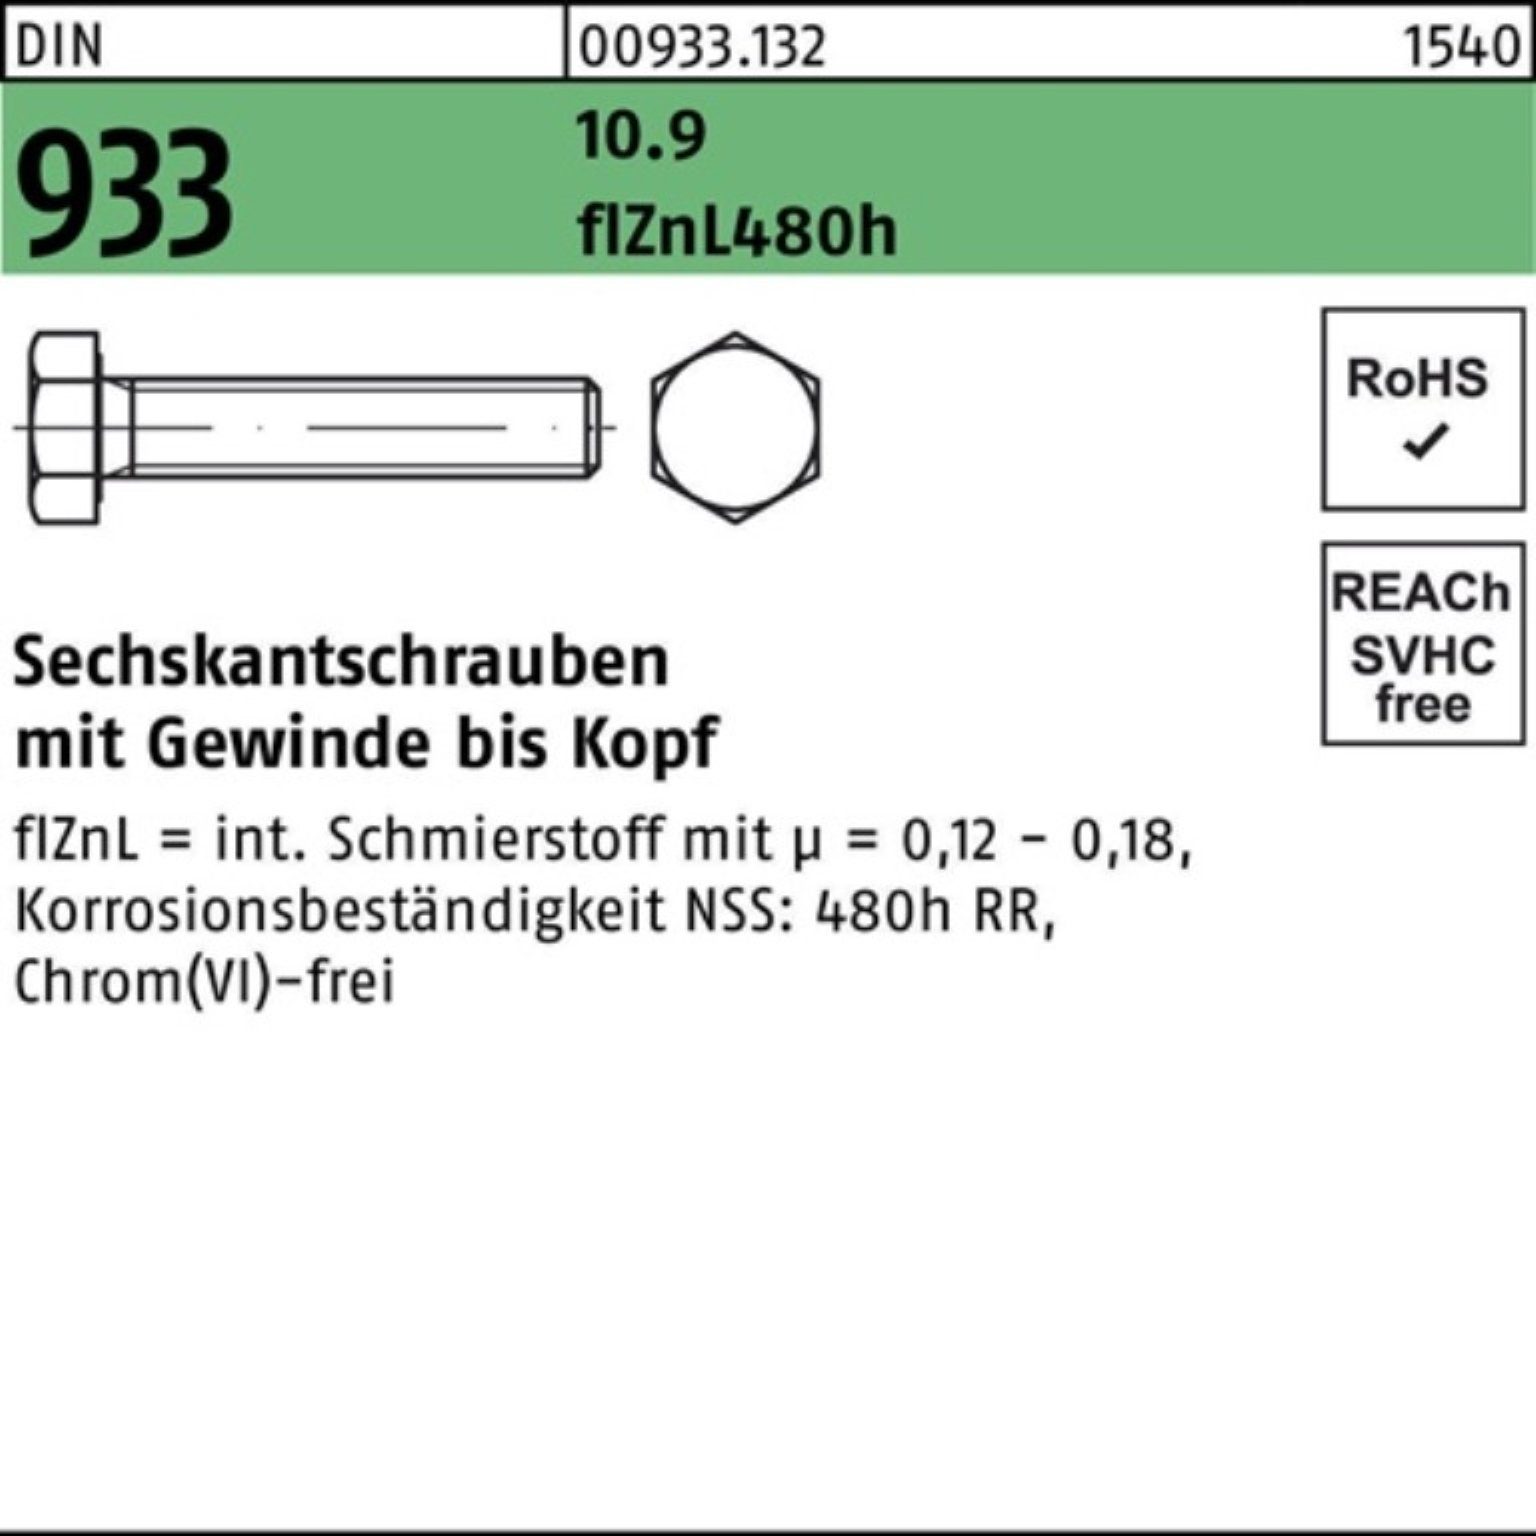 Reyher Sechskantschraube 200er Pack Sechskantschraube DIN 933 VG M8x 55 10.9 flZnL/nc/x/x/480h